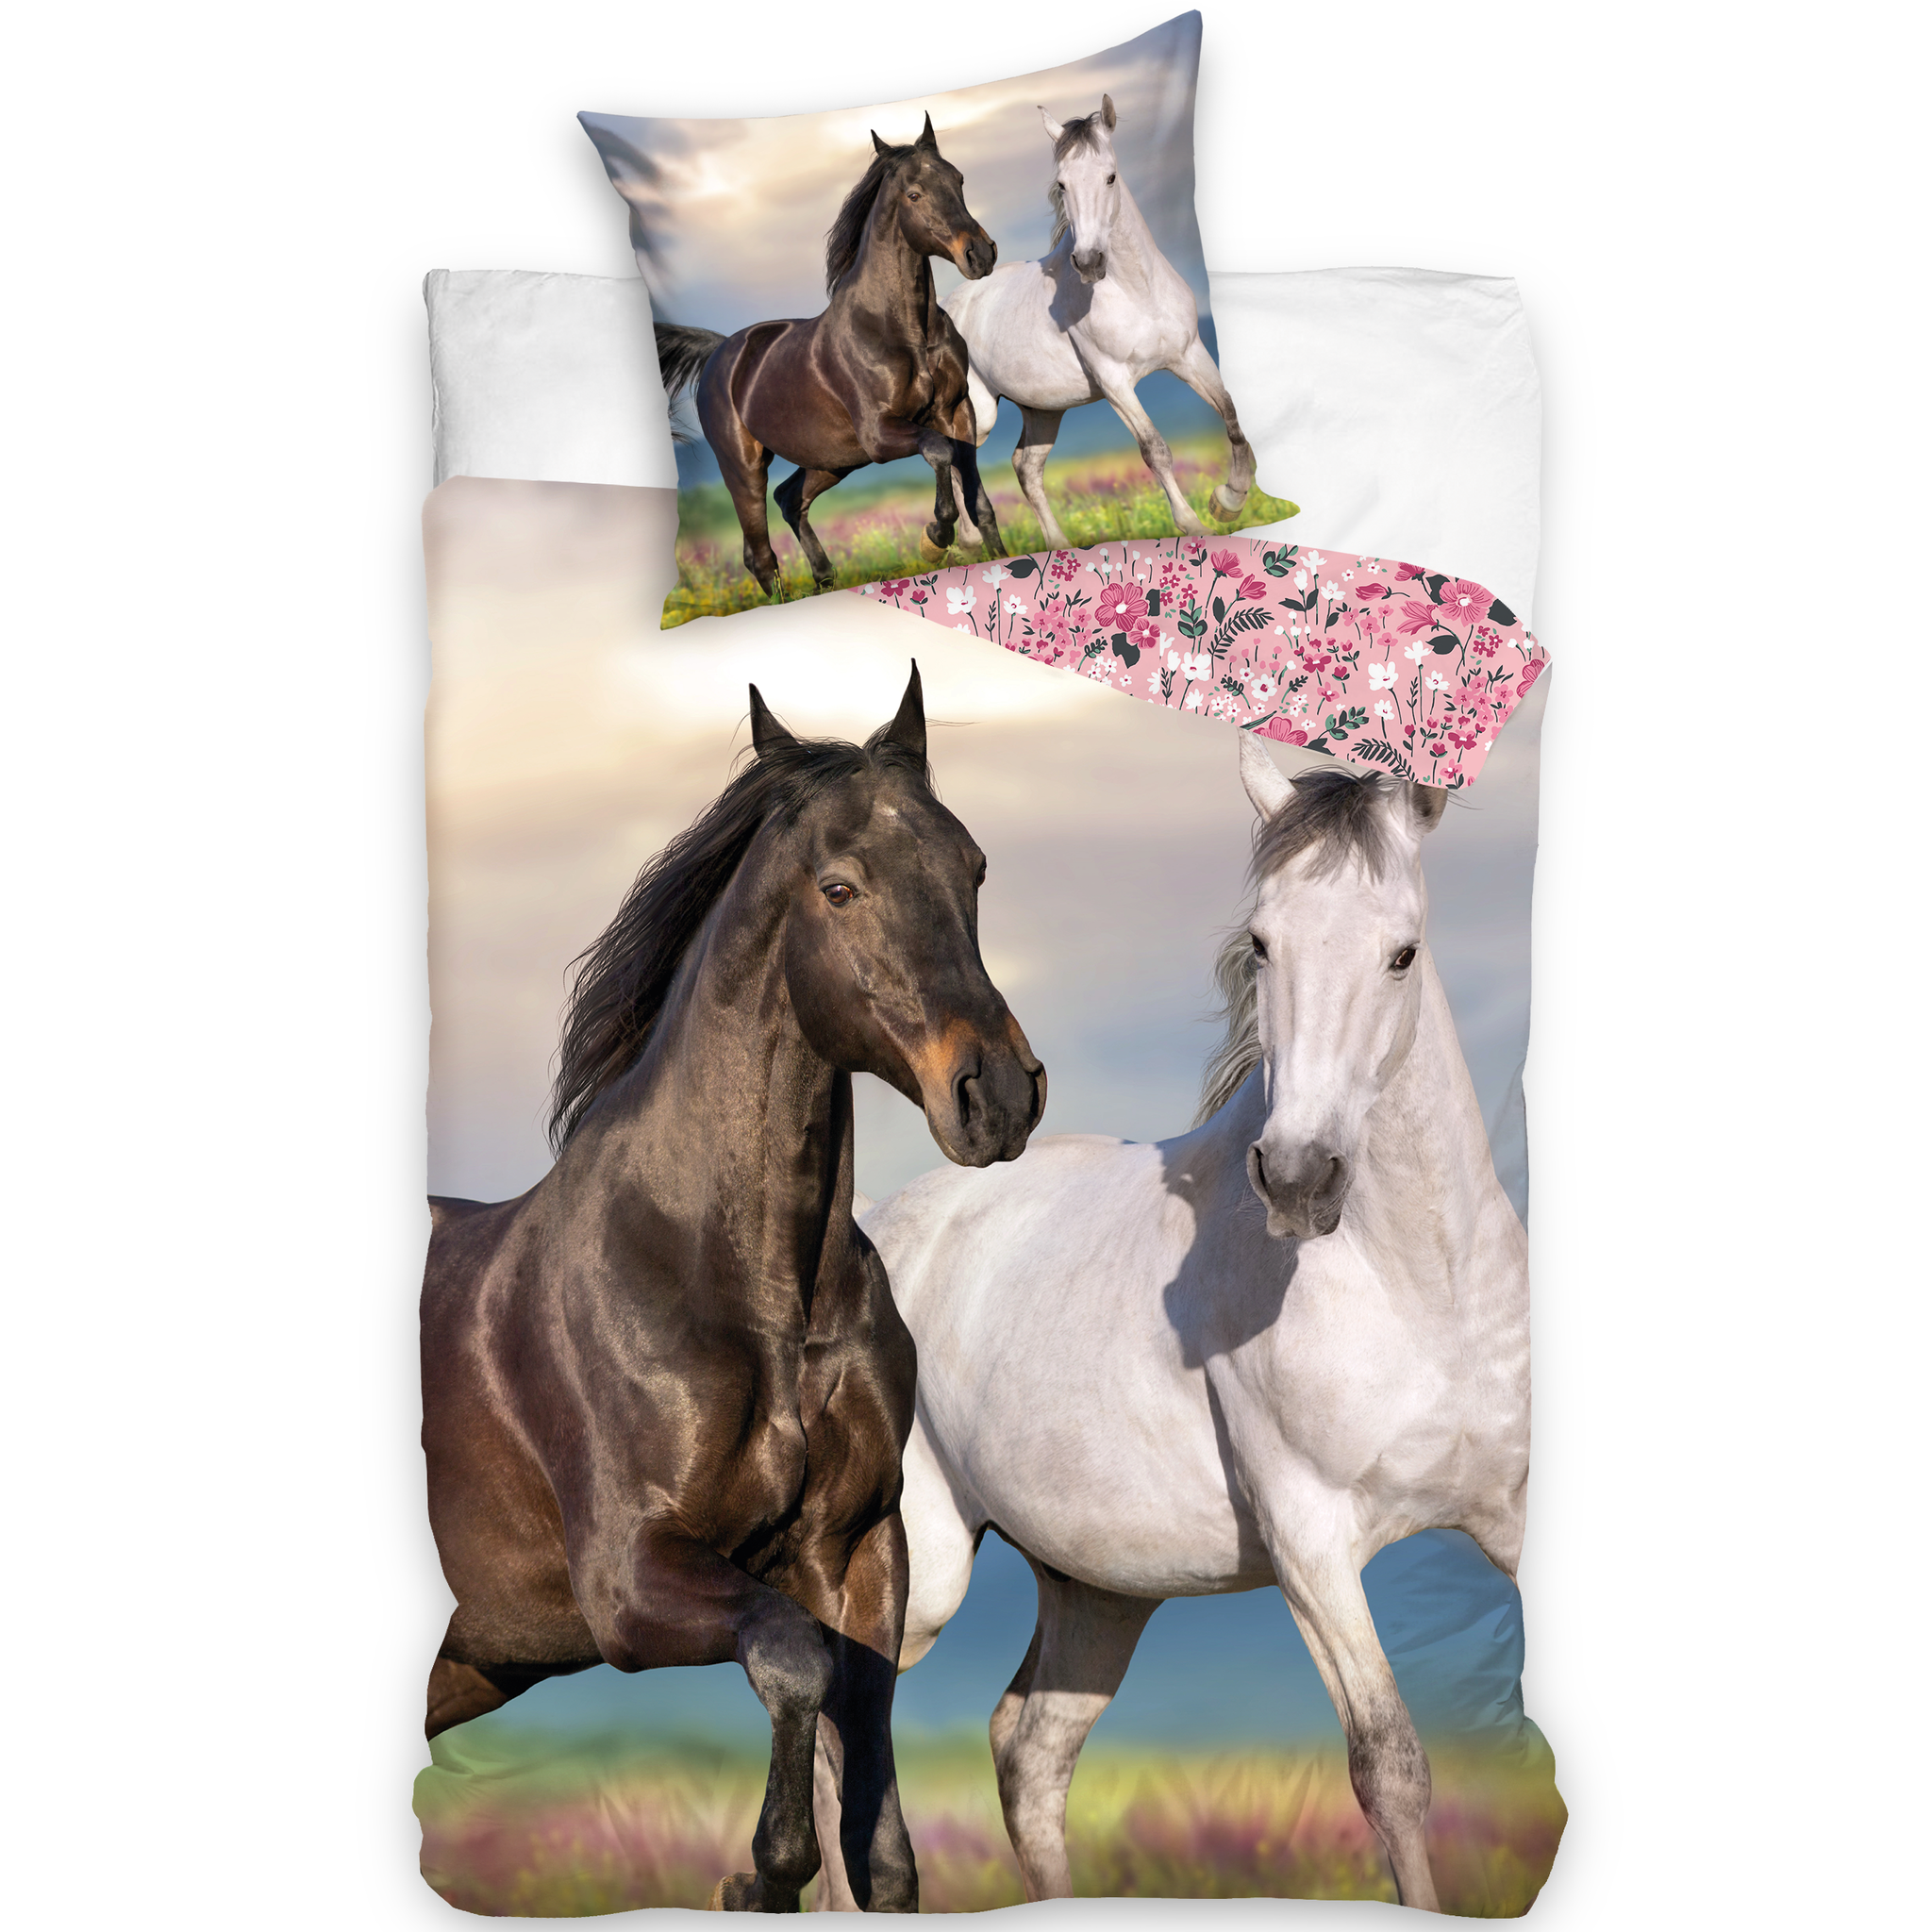 Animal Pictures Duvet cover, Horses - Single - 140 x 200 cm - Cotton